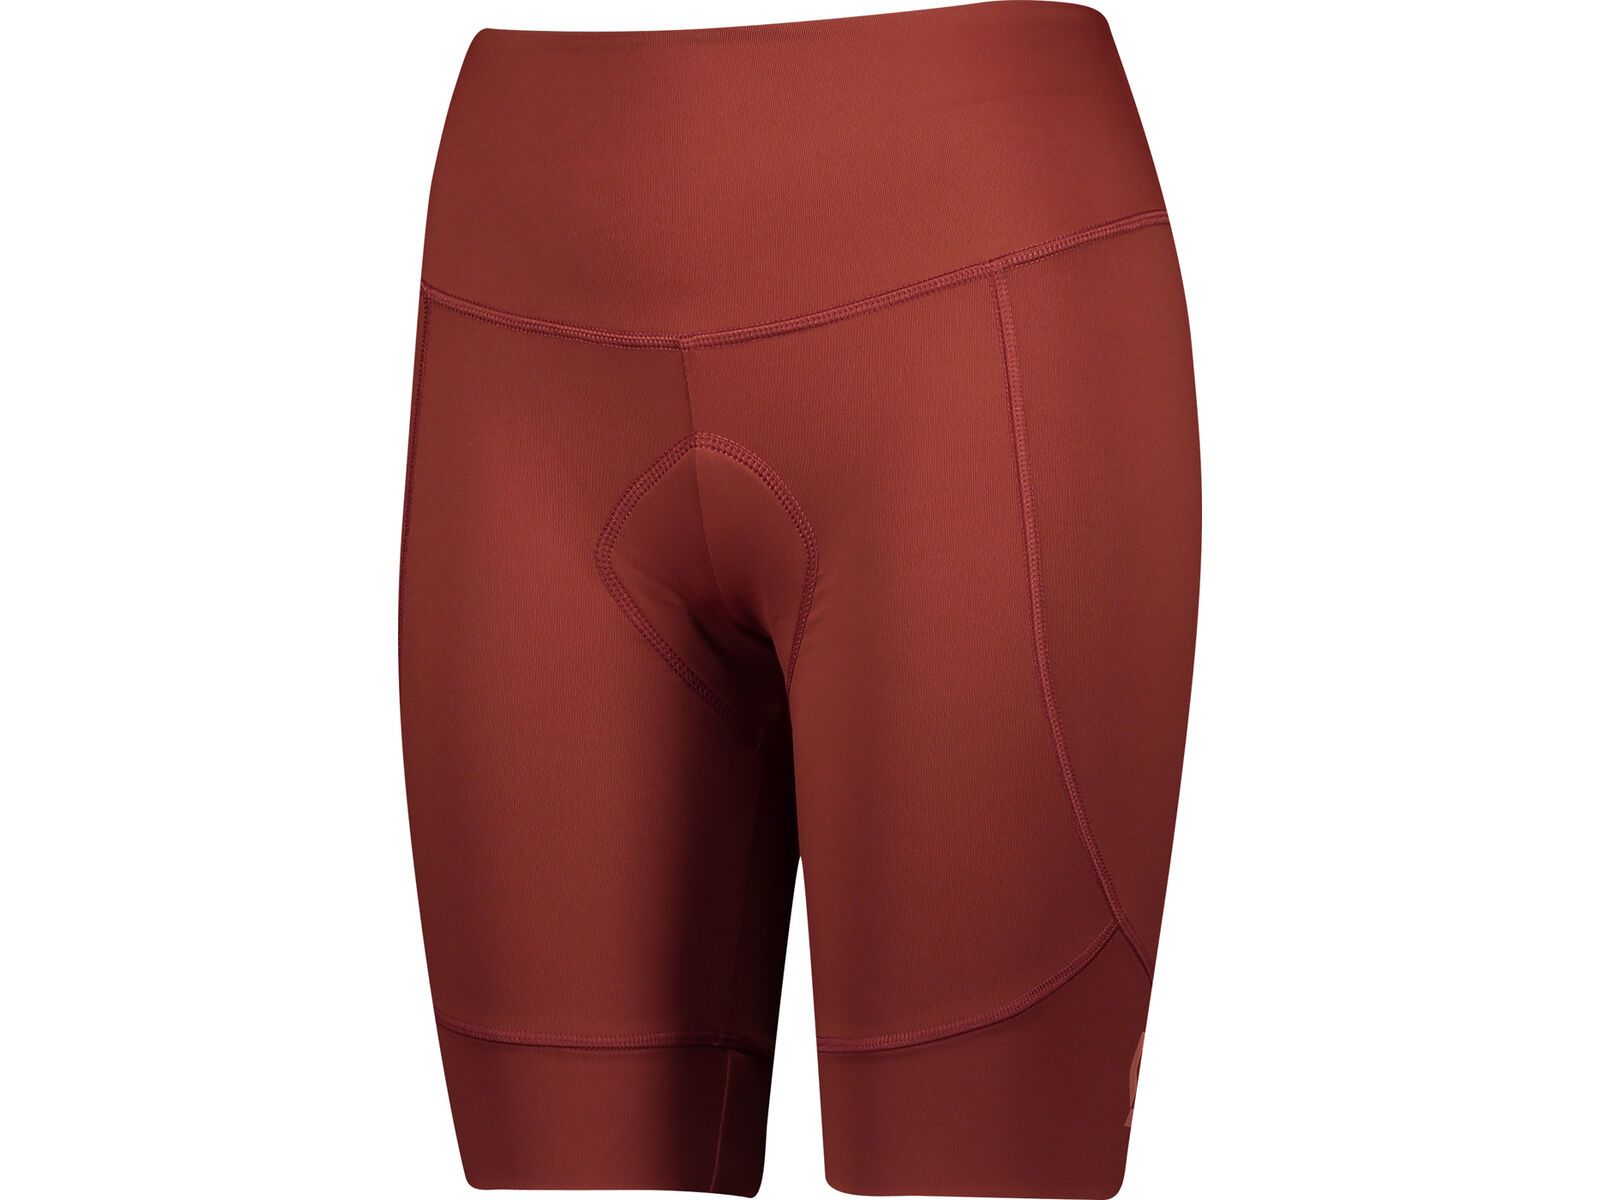 Scott Endurance 10 +++ Women's Shorts, rust red/brick red | Bild 1